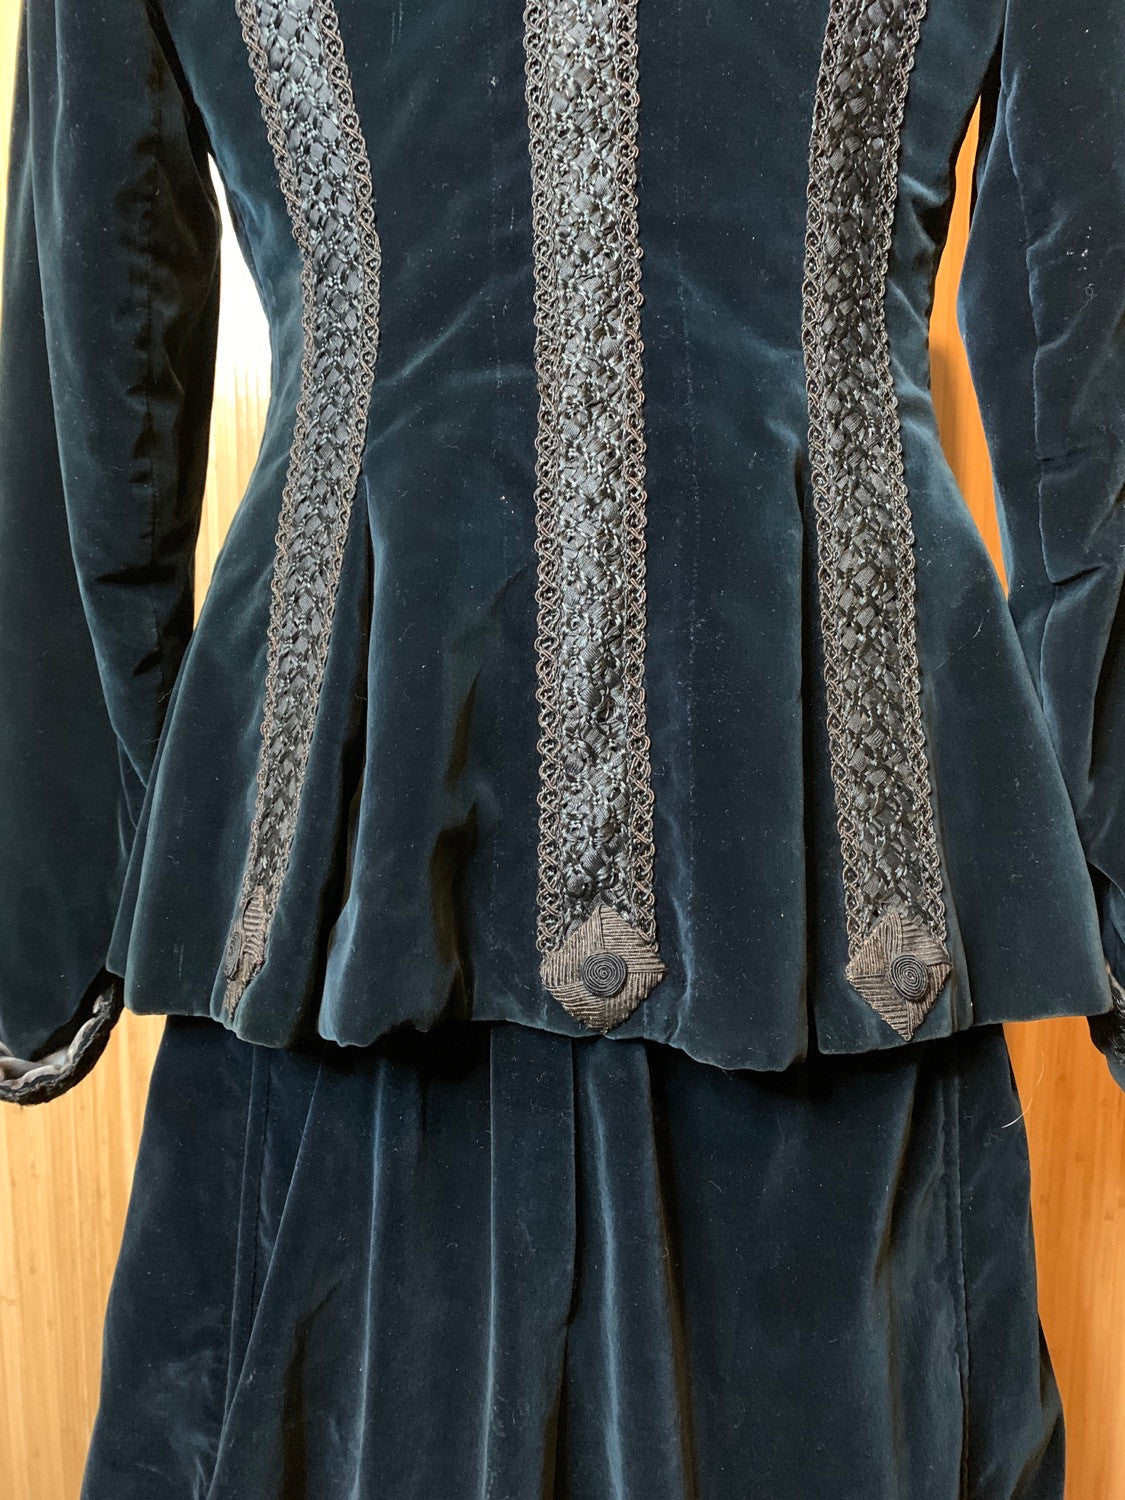 Victorian Ladies Walking Suit by Meyer Jonasson M